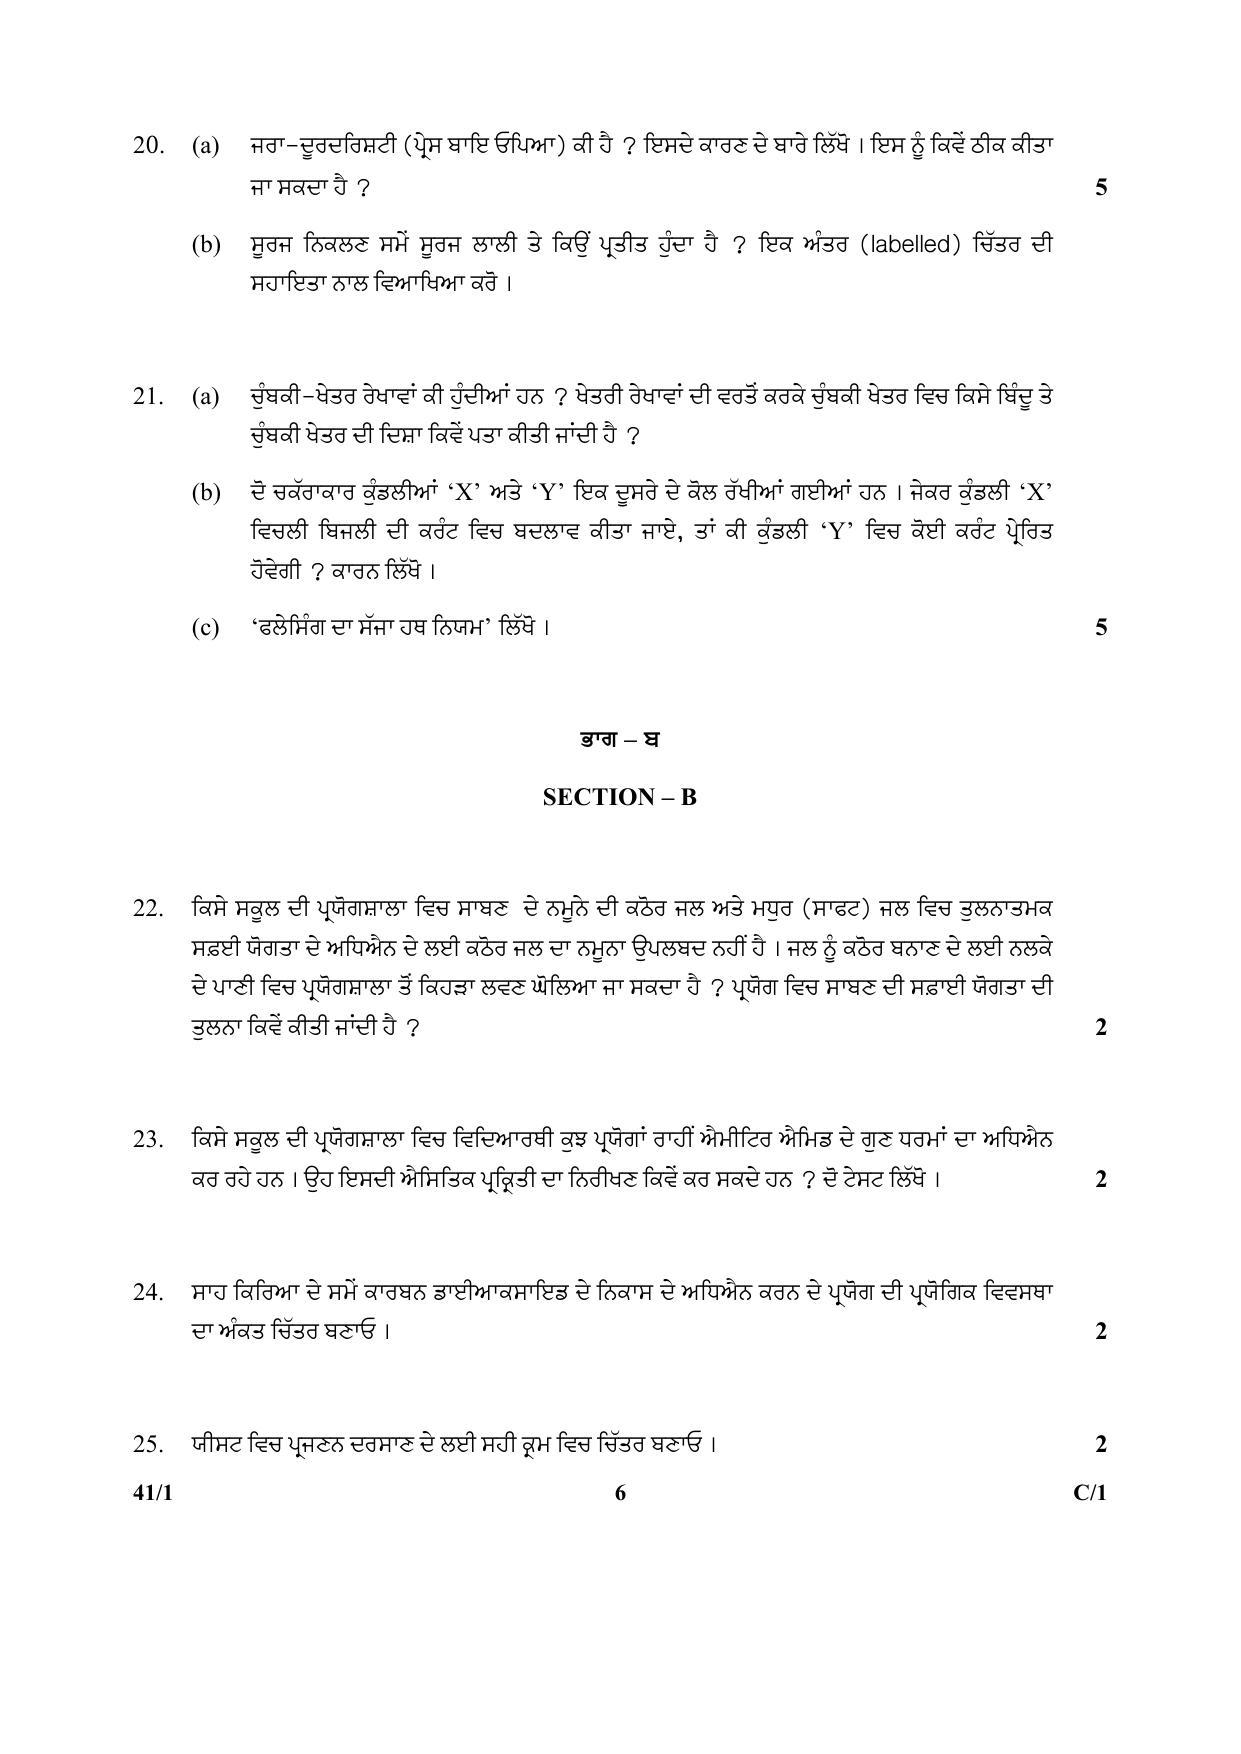 CBSE Class 10 41-1 Science PUNJABI VERSION 2018 Compartment Question Paper - Page 6